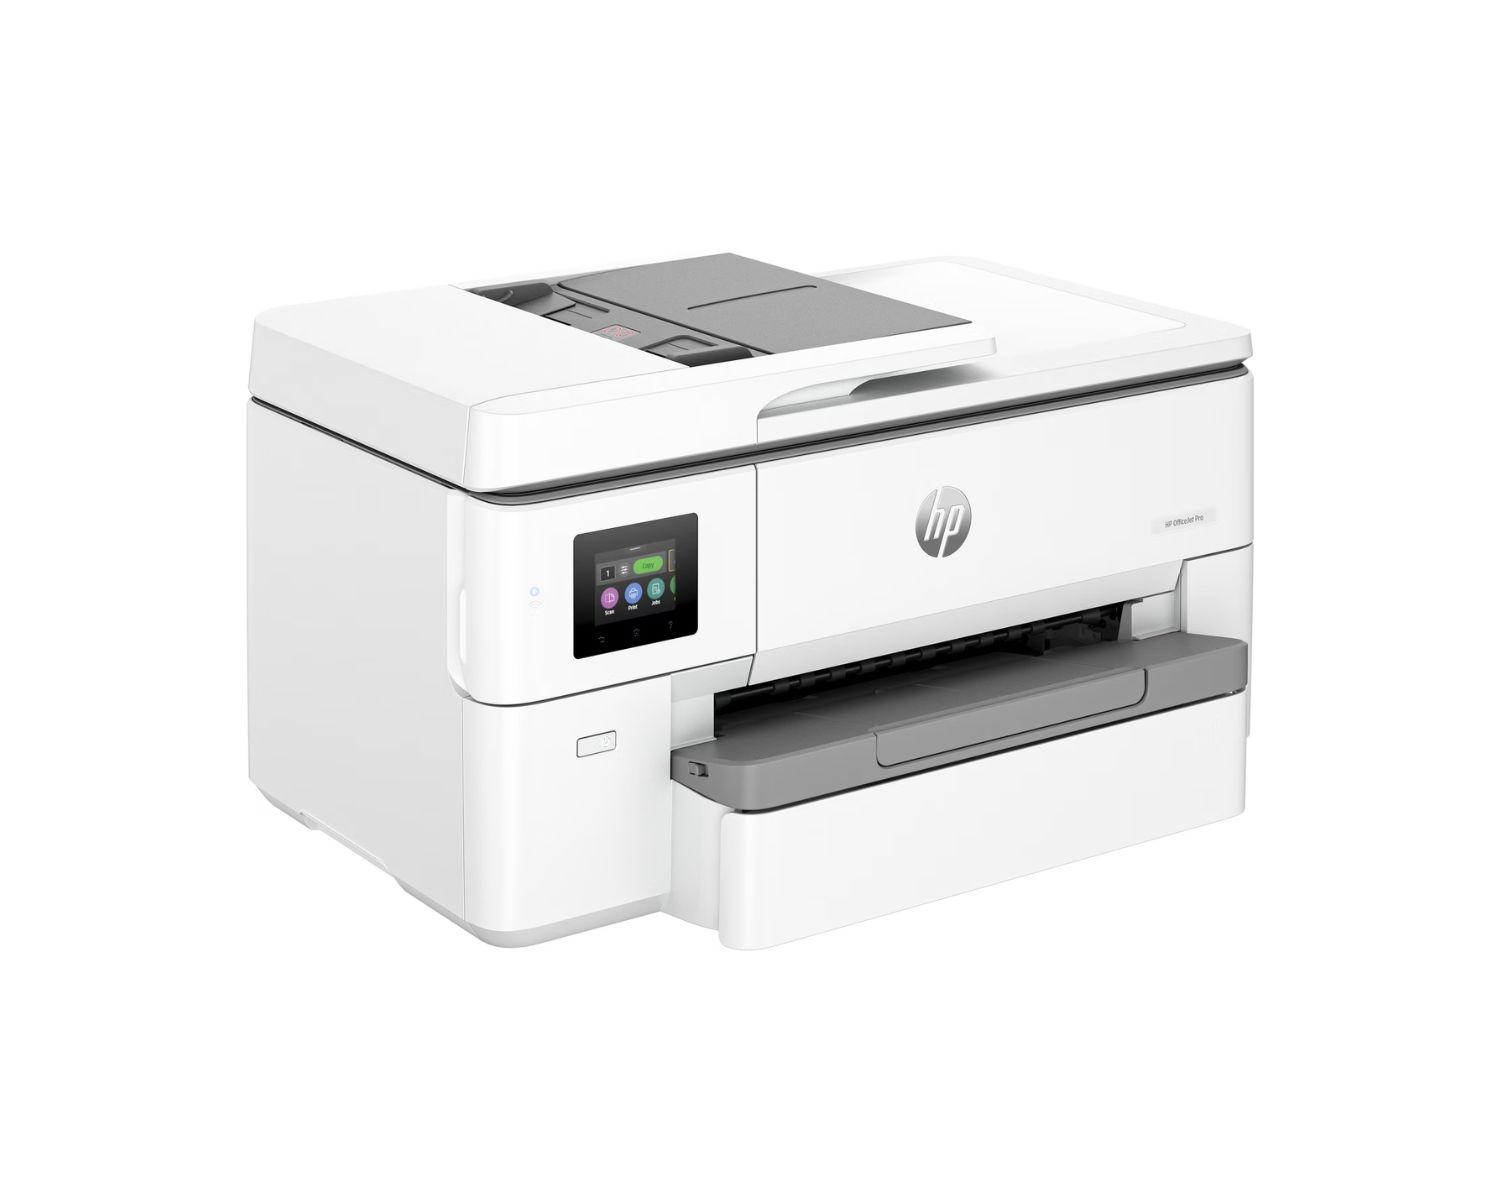 Why HP Printer Not Printing